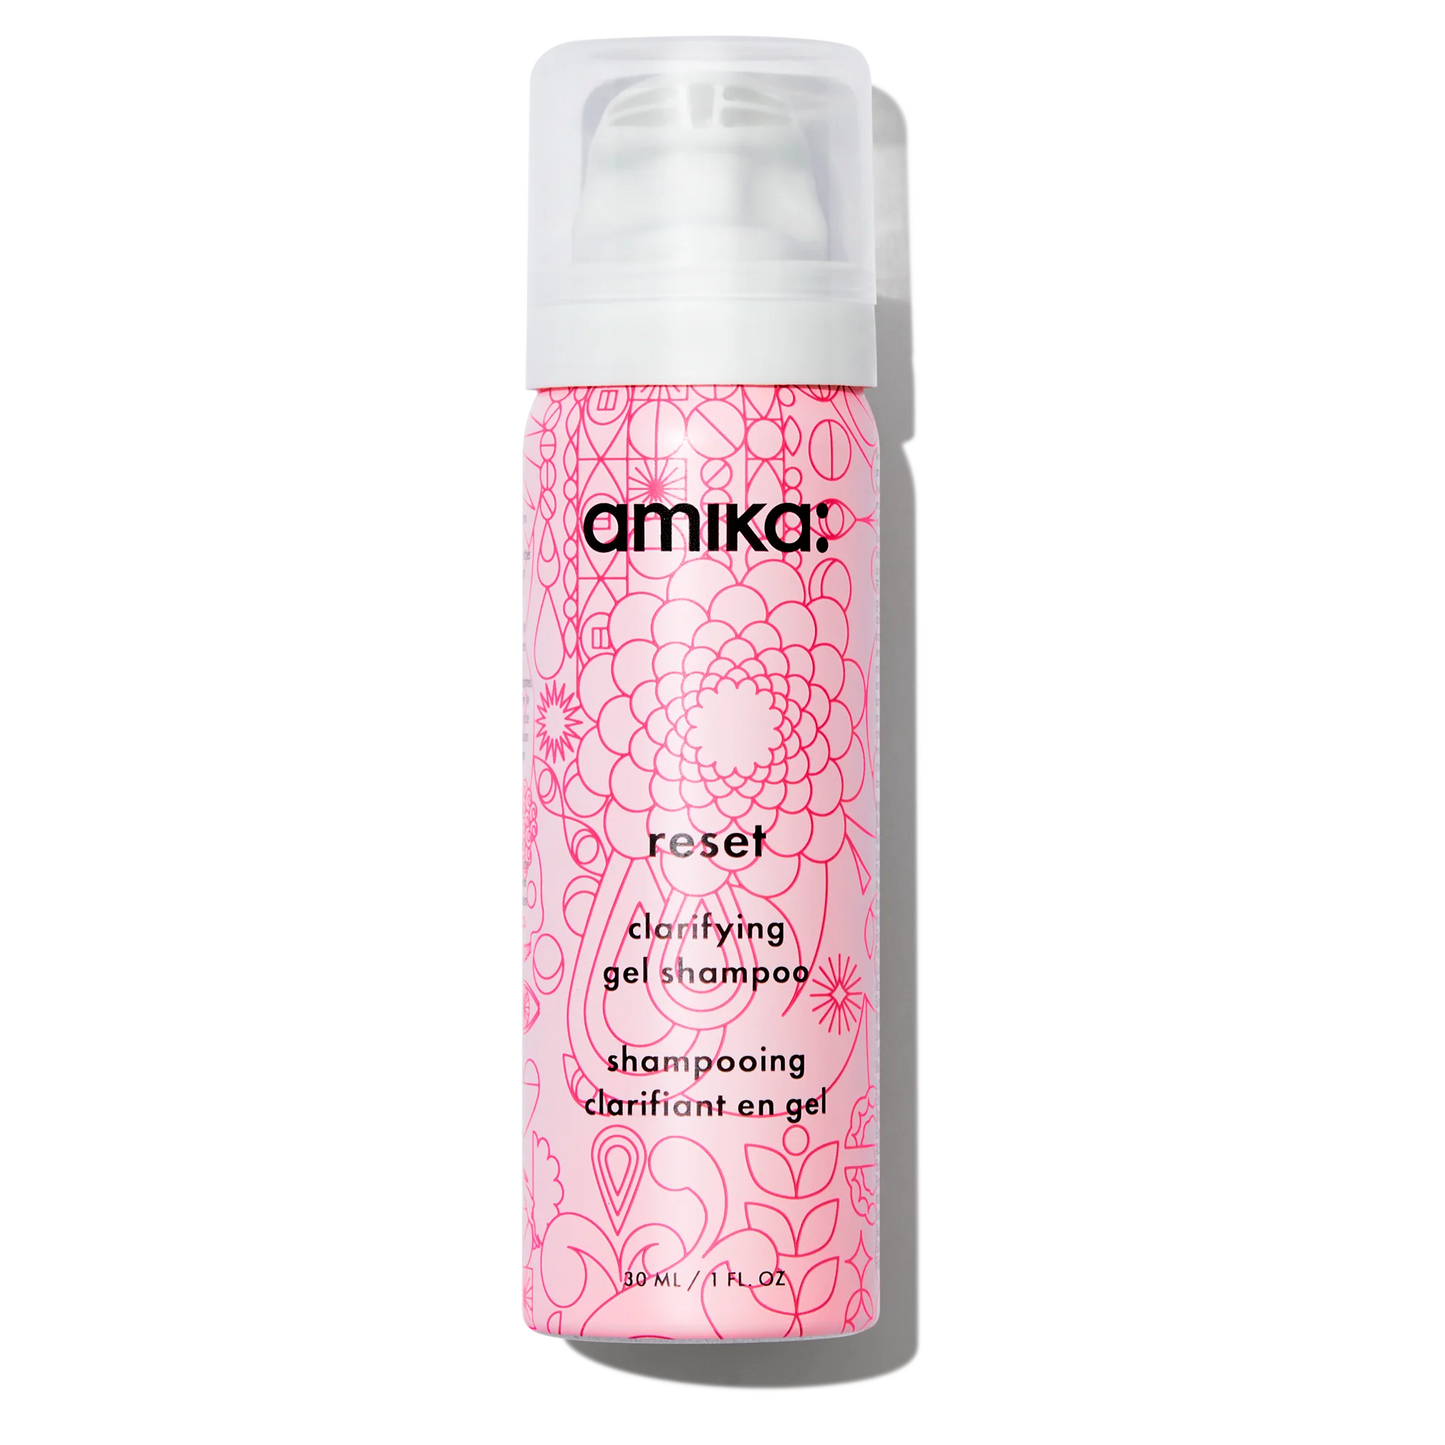 AMIKA RESET
Clarifying + Cleansing gel shampoo